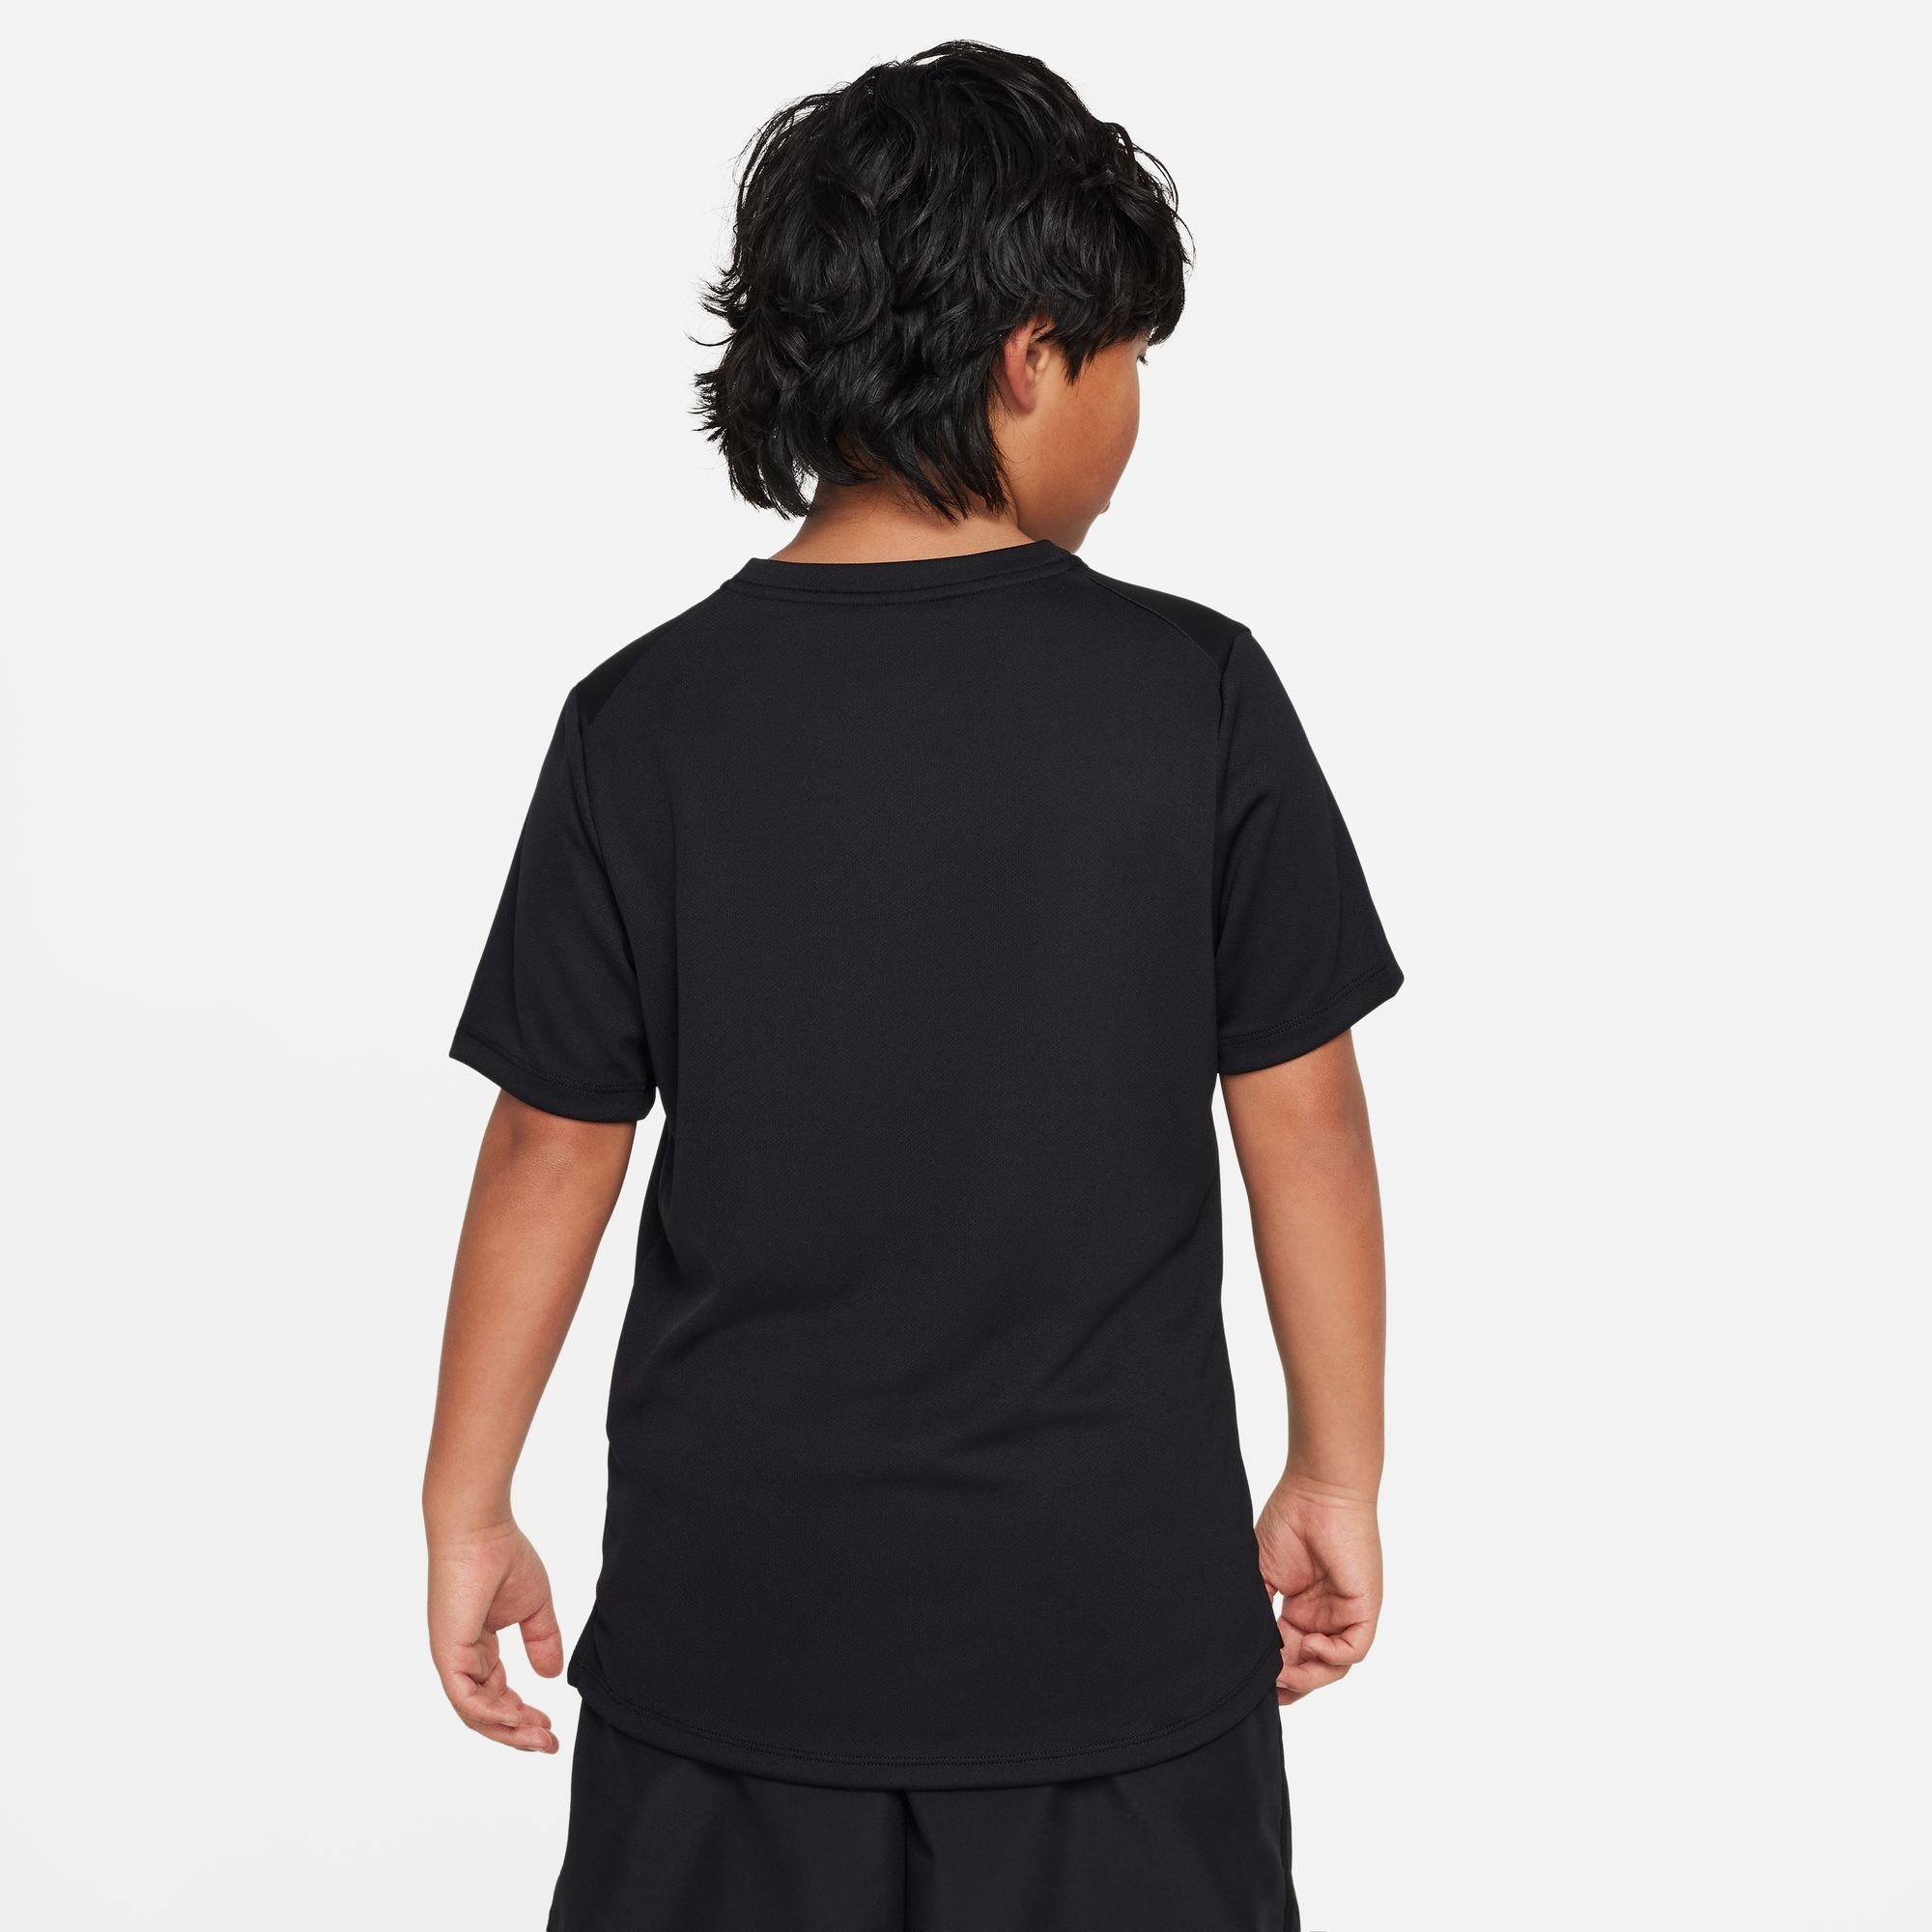 BLACK/REFLECTIVE MILER DRI-FIT TRAINING SILV TOP (BOYS) KIDS' Nike SHORT-SLEEVE BIG Trainingsshirt